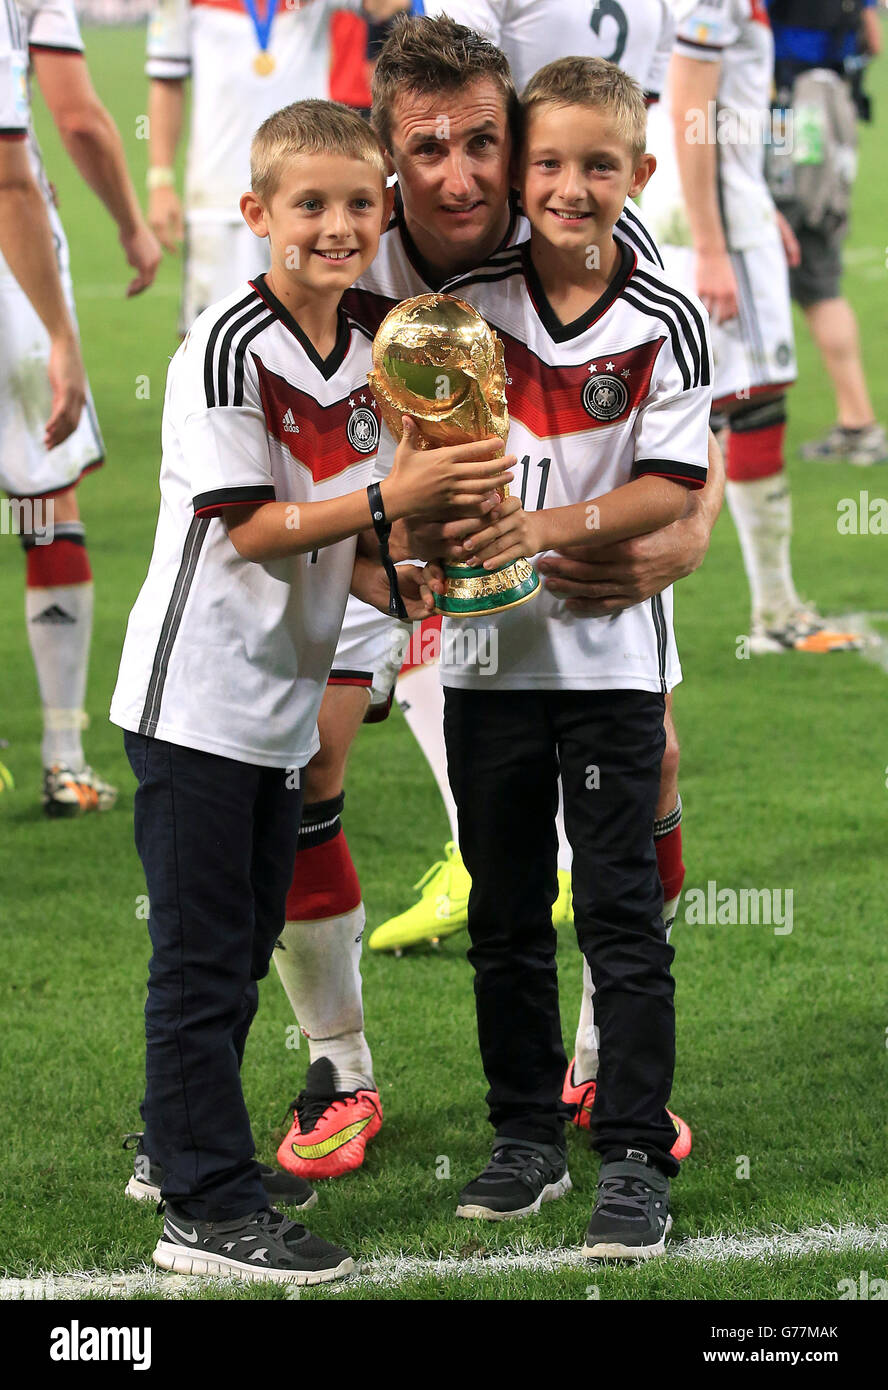 Soccer - FIFA World Cup 2014 - Final - Germany v Argentina - Estadio do Maracana. Germany's Miroslav Klose celebrates winning the World Cup final with the trophy Stock Photo